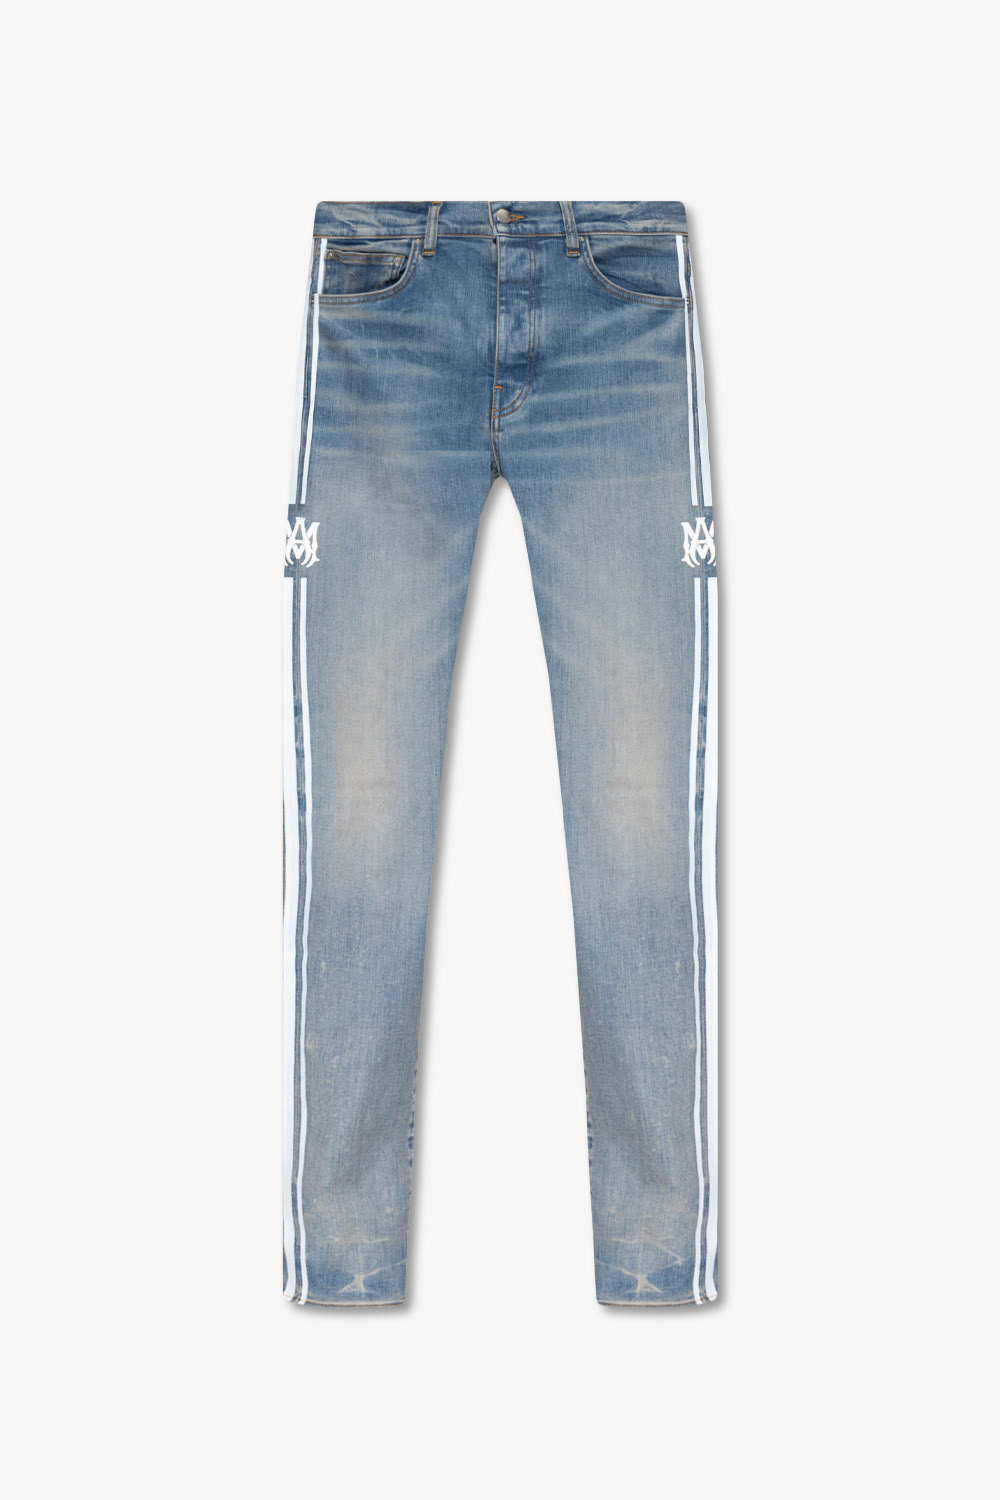 Amiri Monogrammed jeans